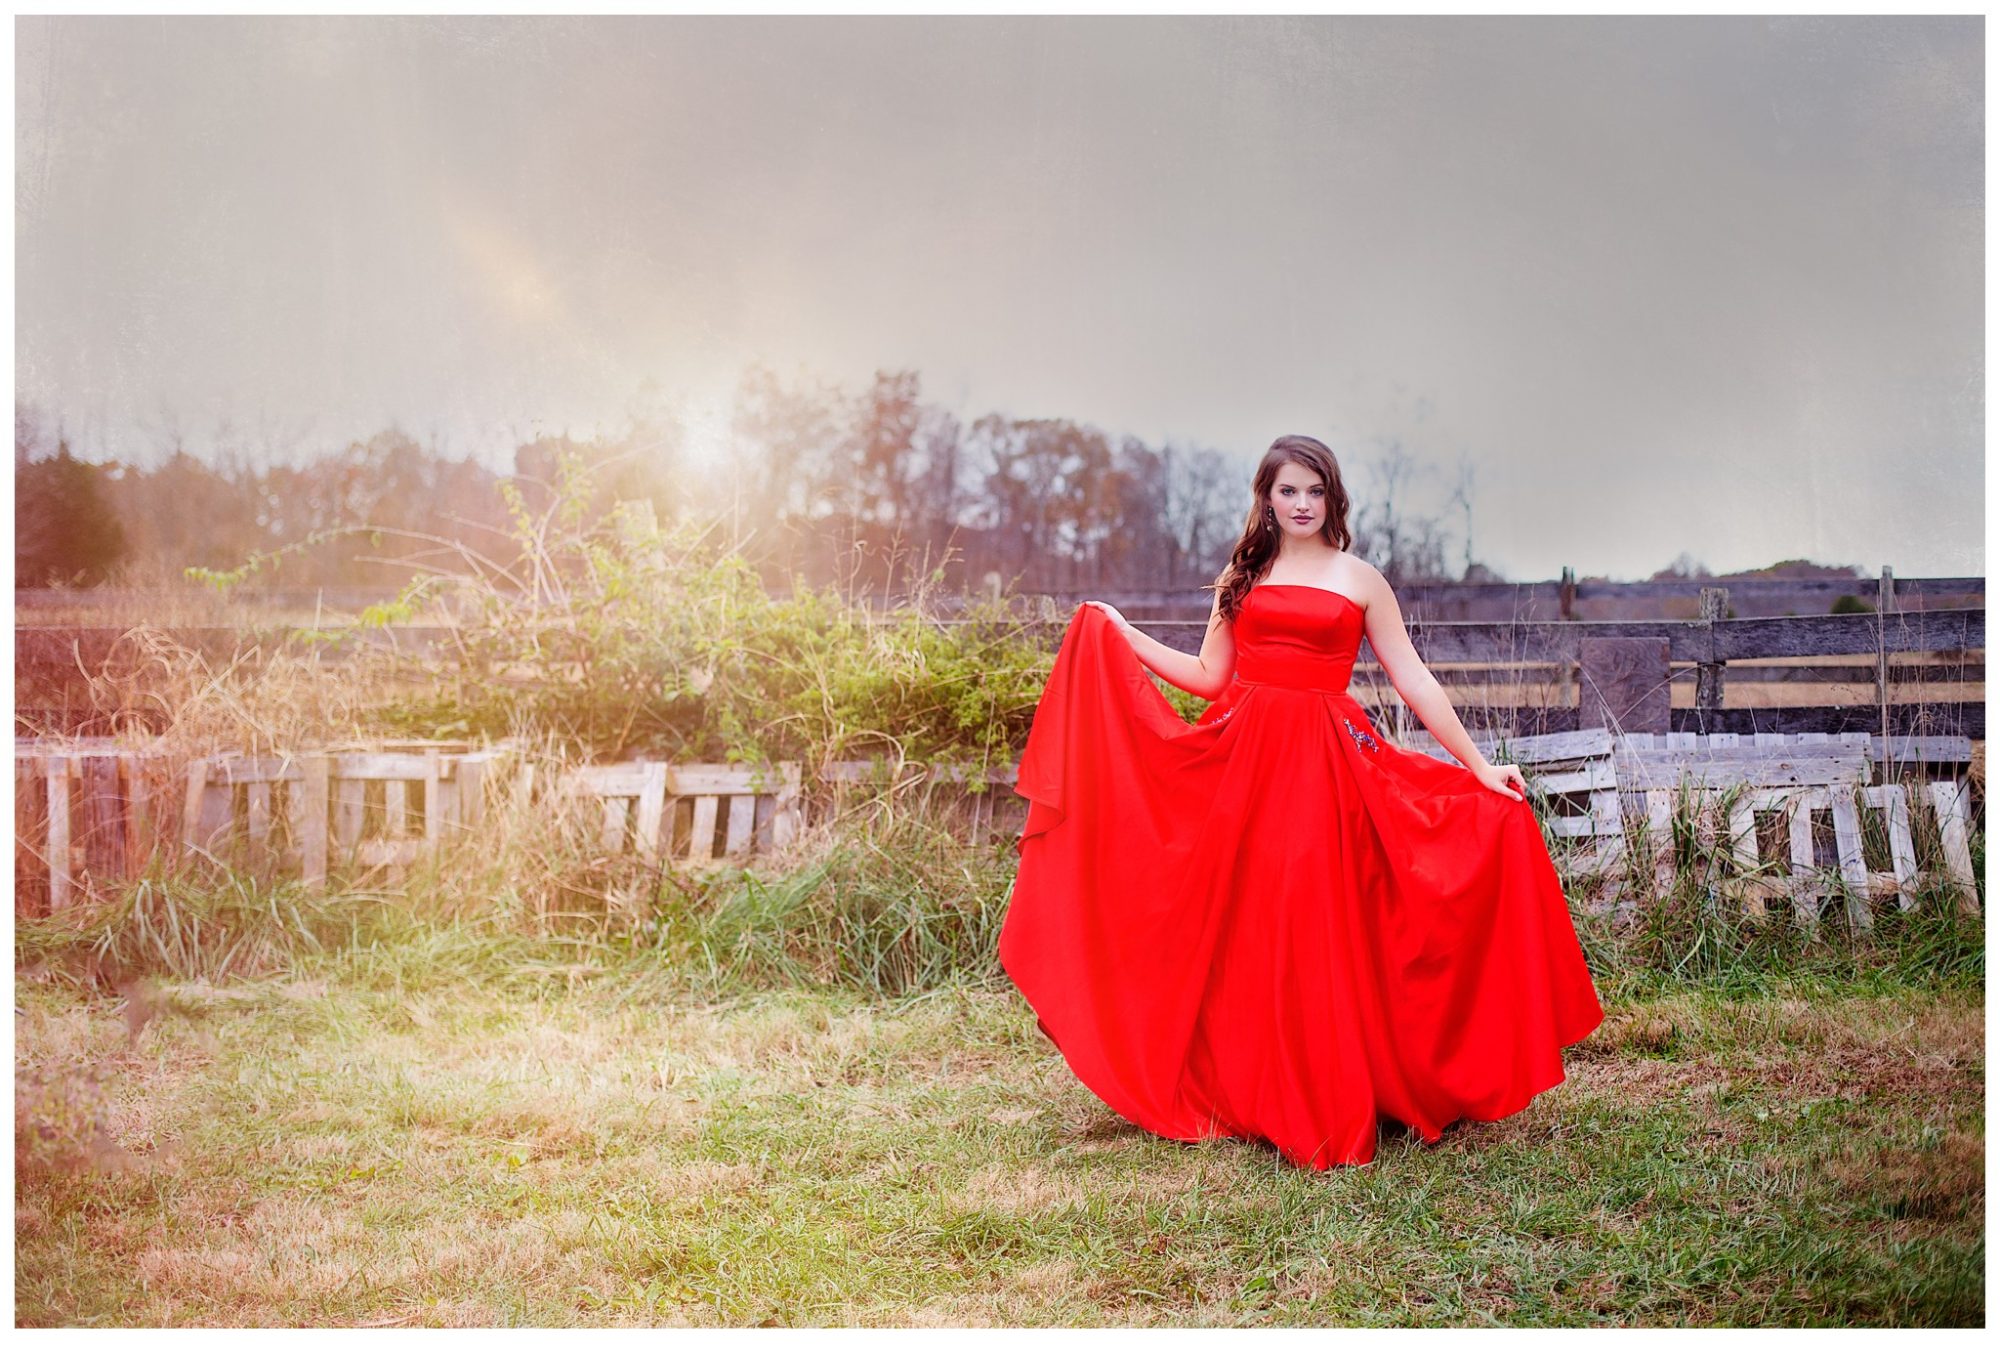 High school senior girl in red prom dress standing in beautiful field